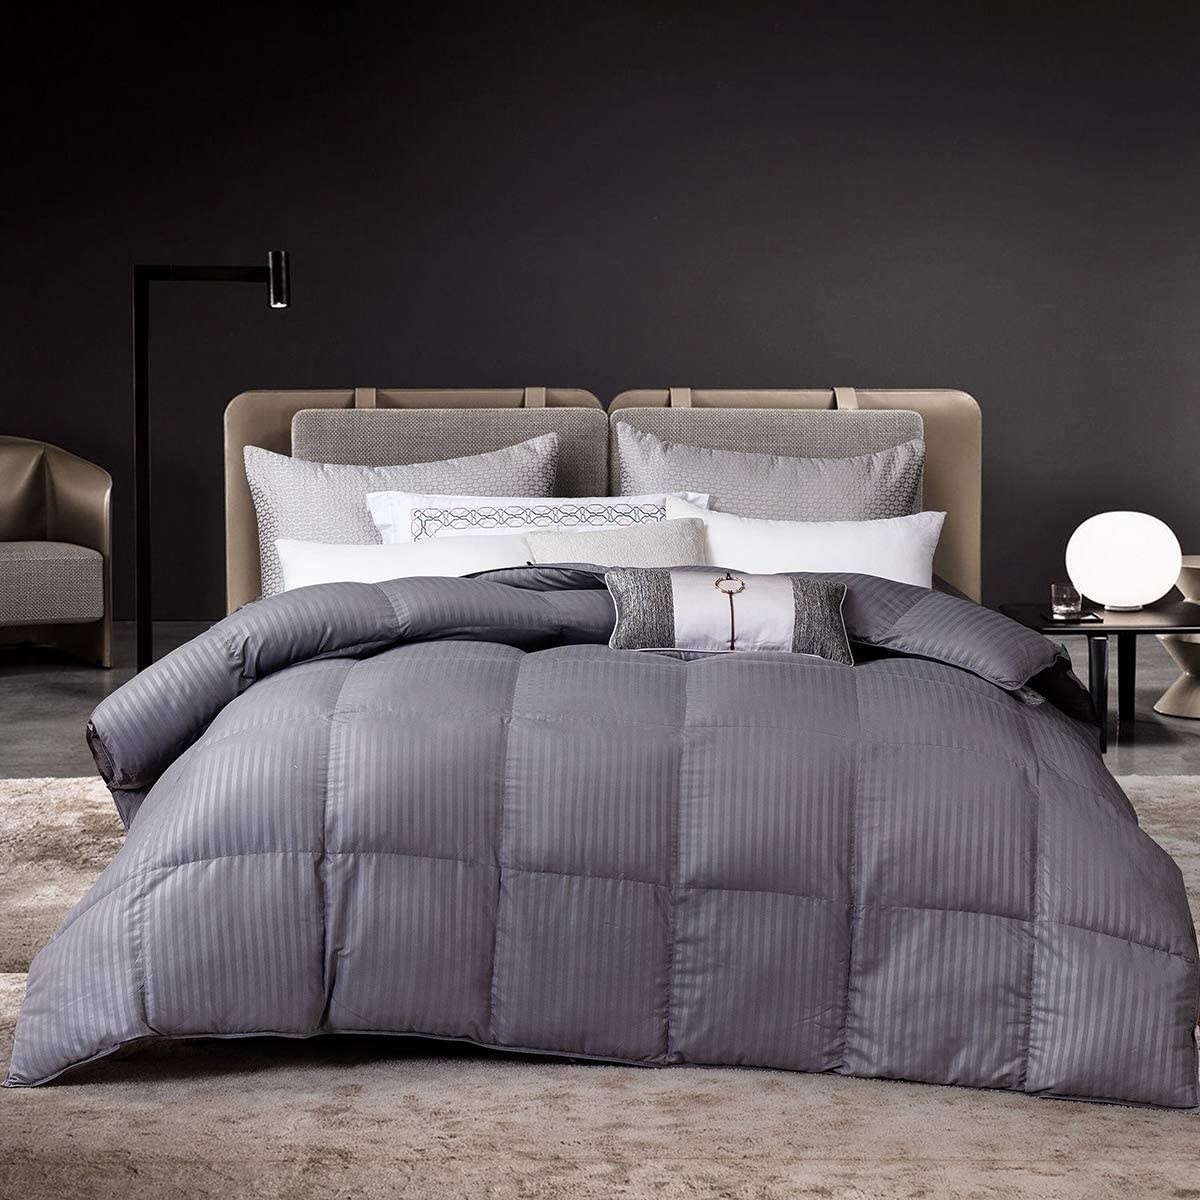 The grey stripe comforter